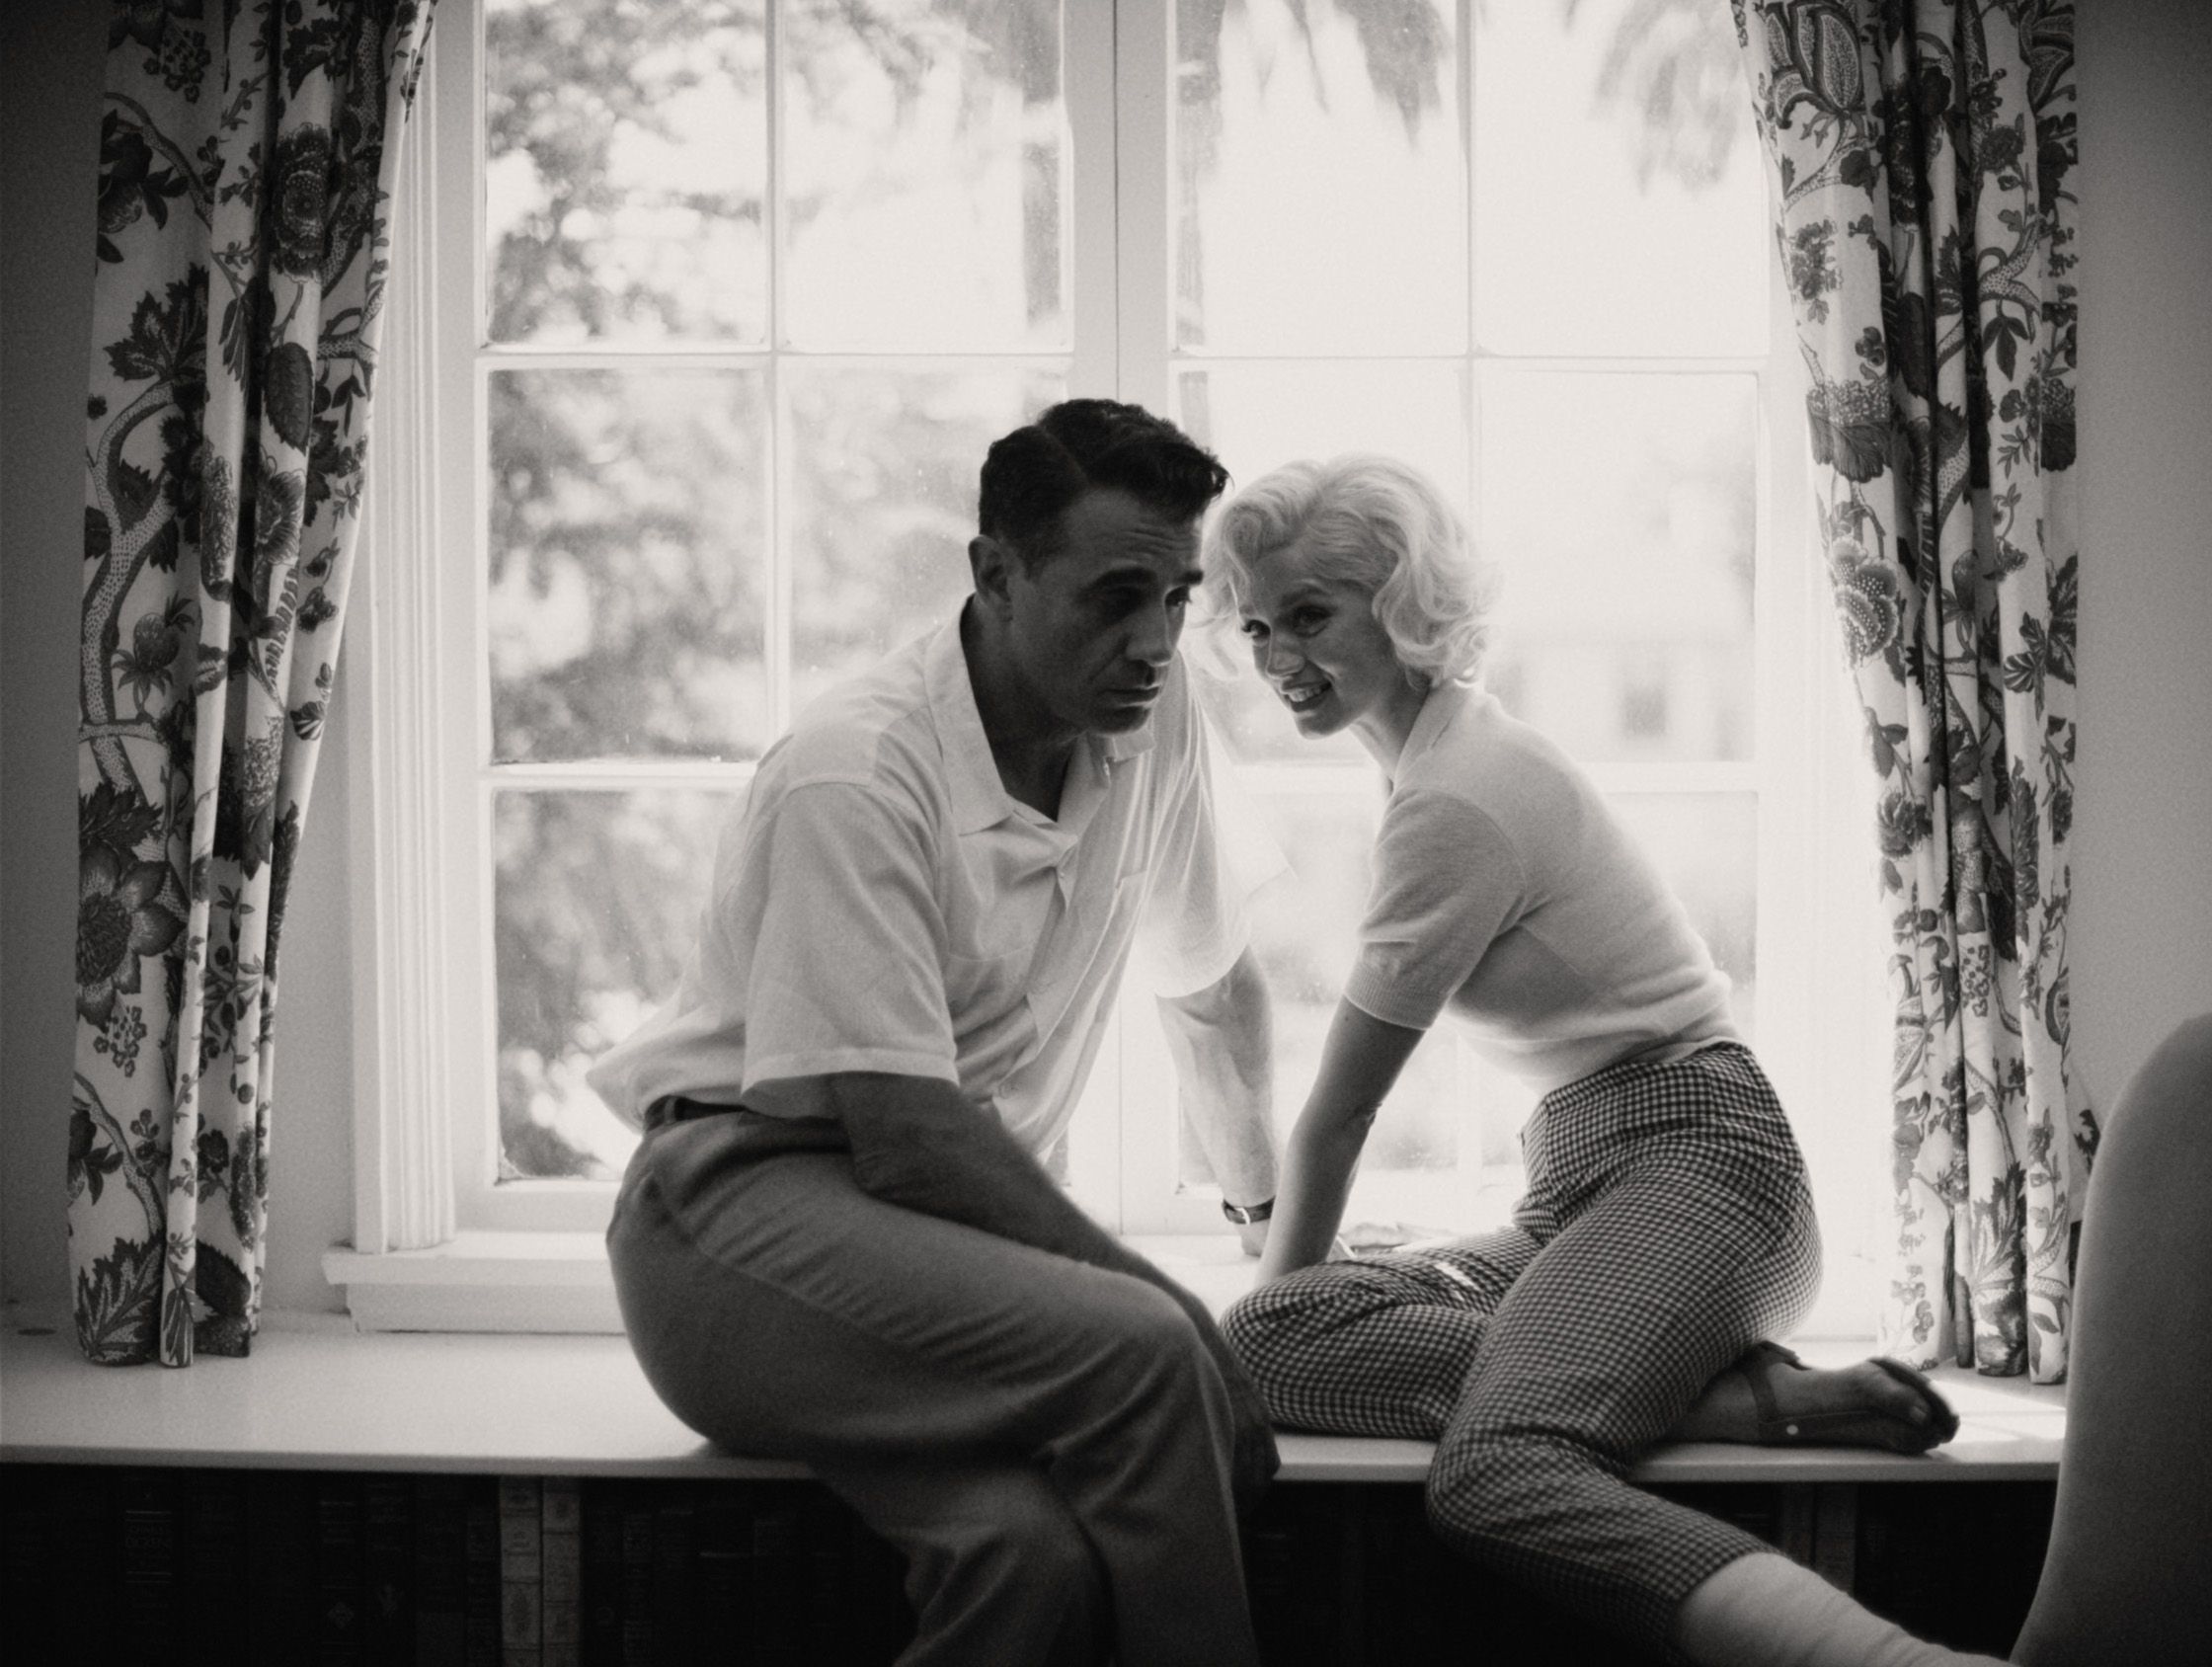 Actress Marilyn Monroe and baseball player Joe DiMaggio just after